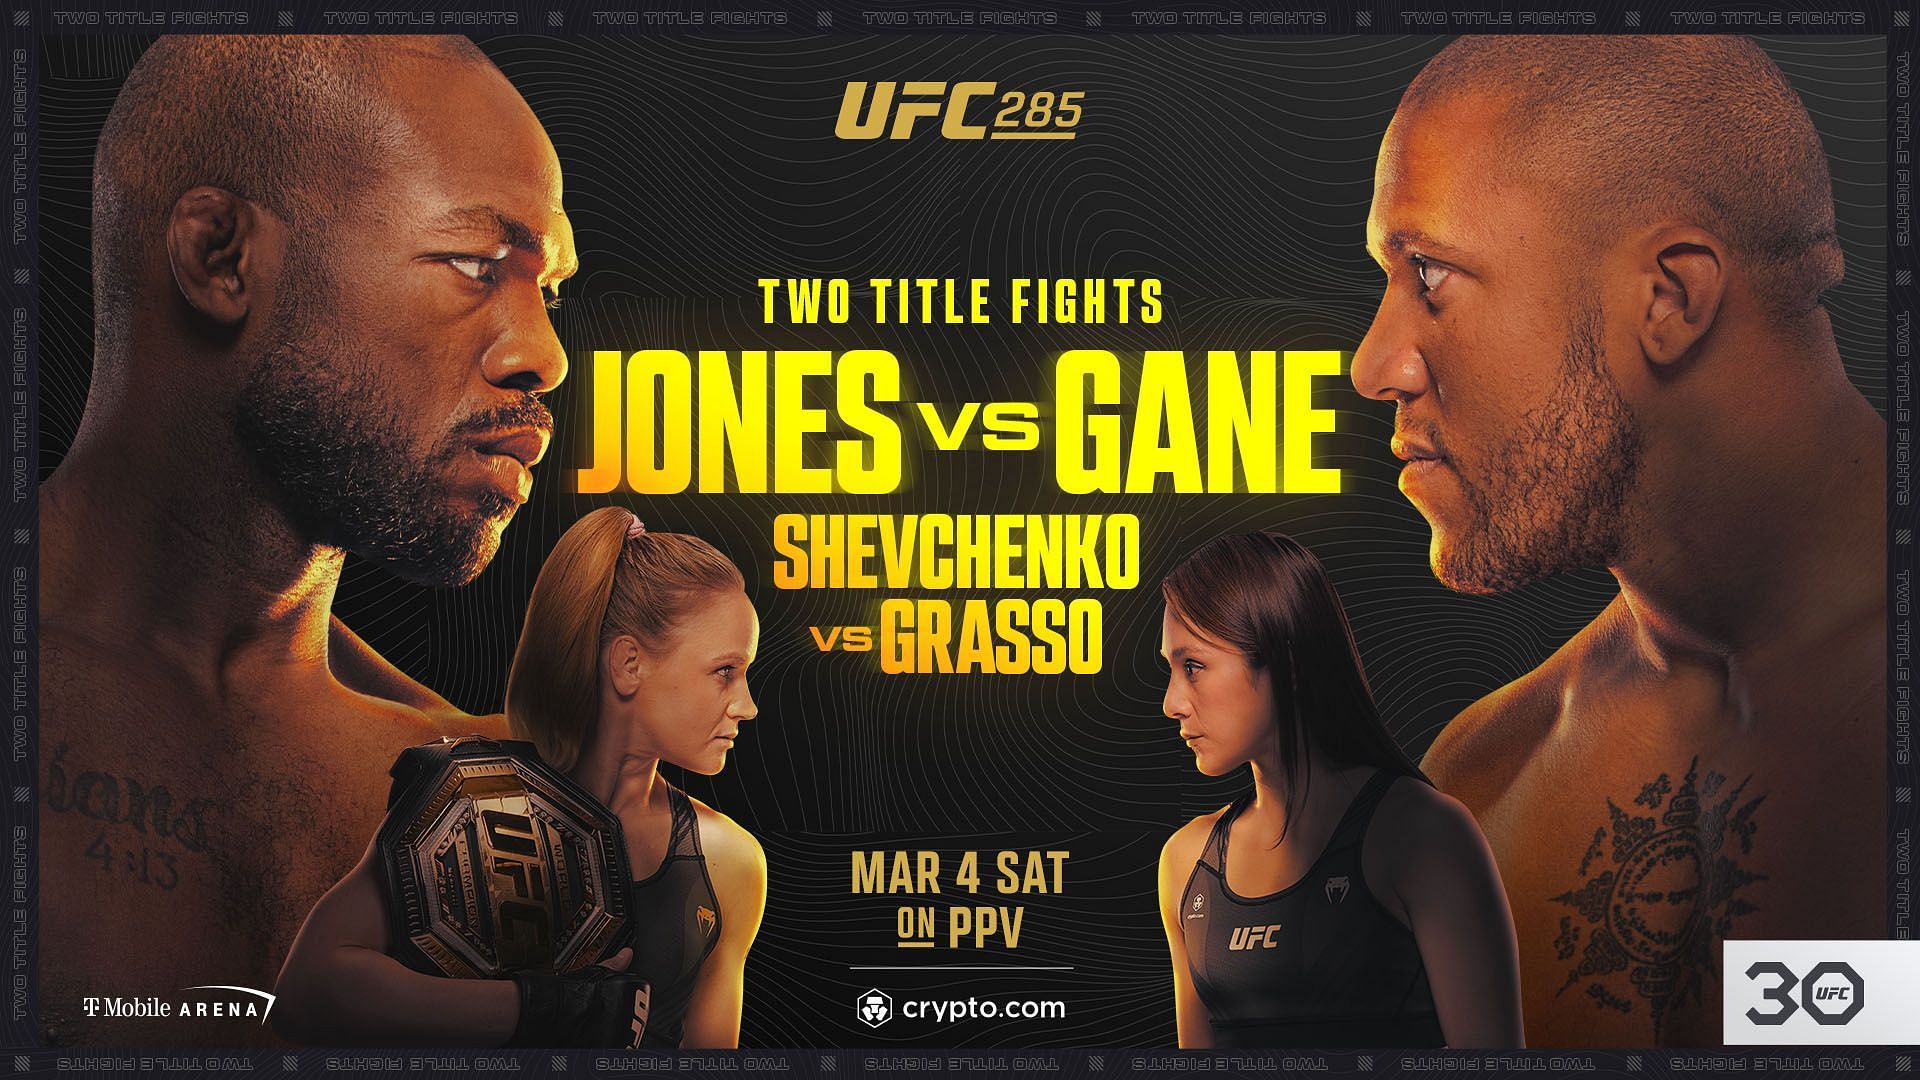 UFC 285 poster [Image via @ufc on Instagram]